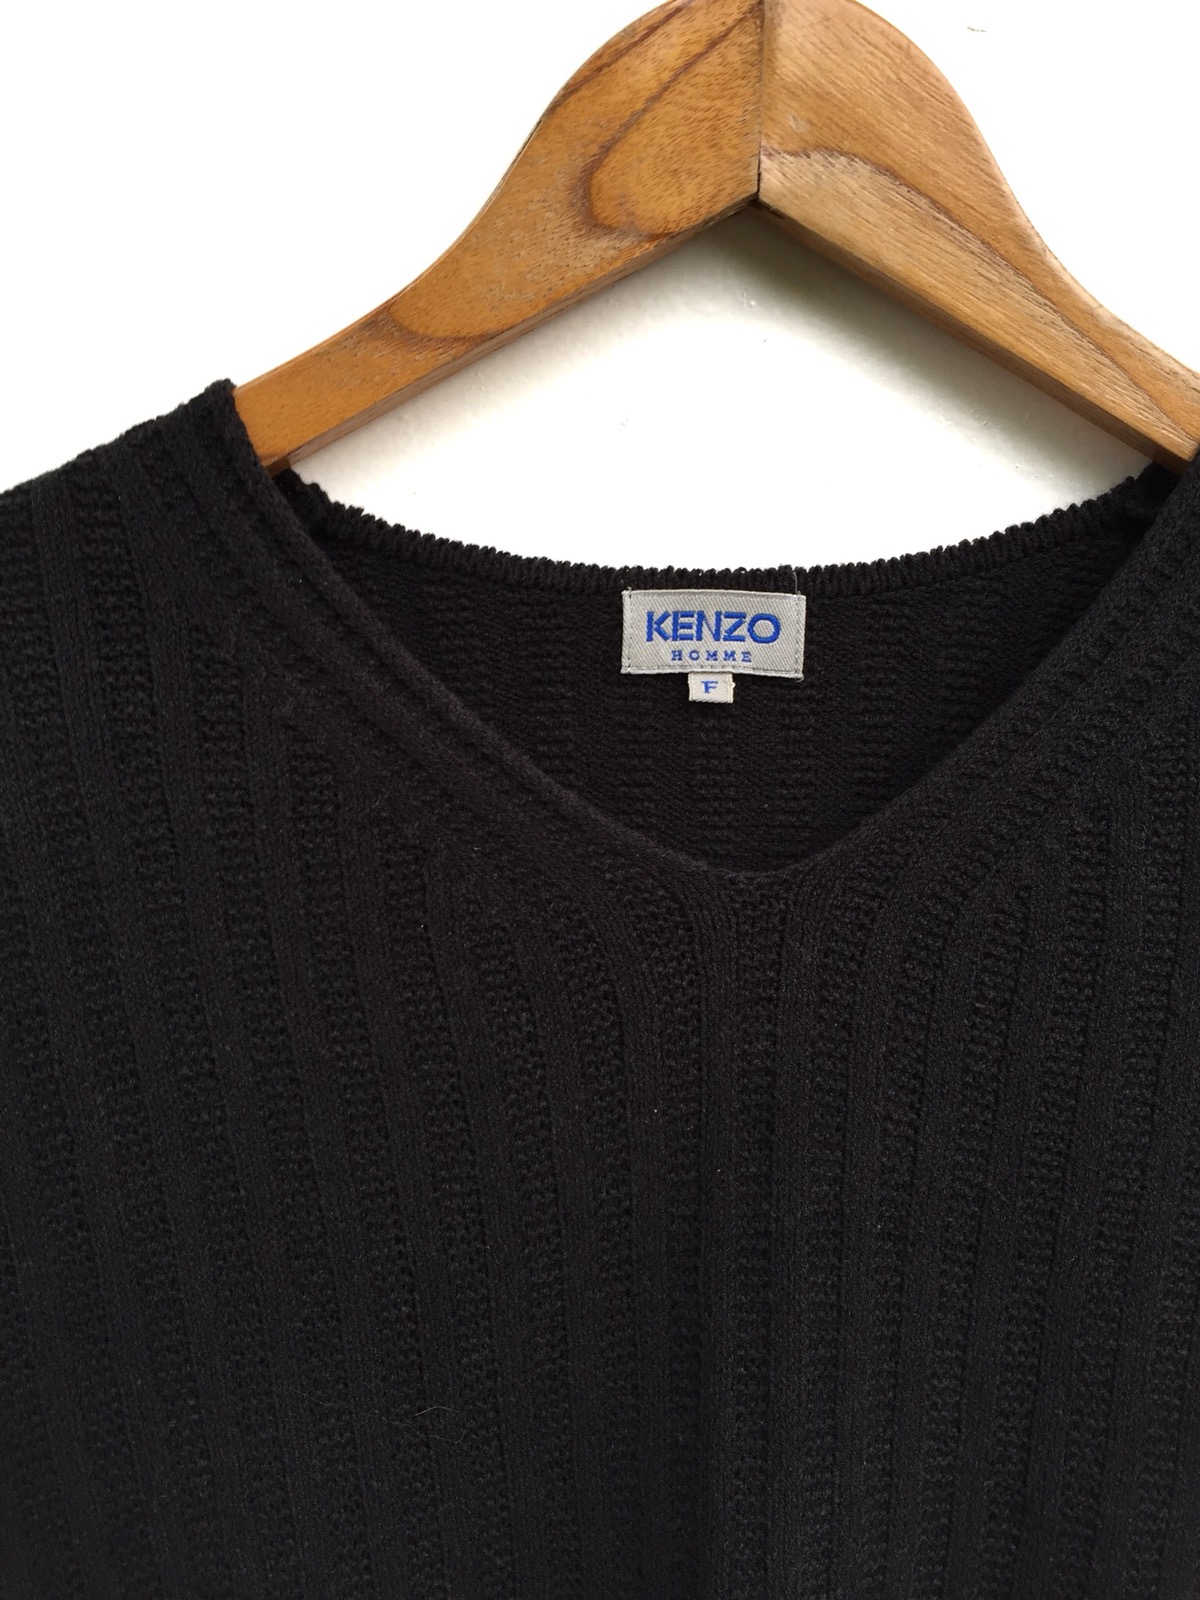 Vintage Japanese Brand Kenzo Hand Knit Black Sweatshirt - 5